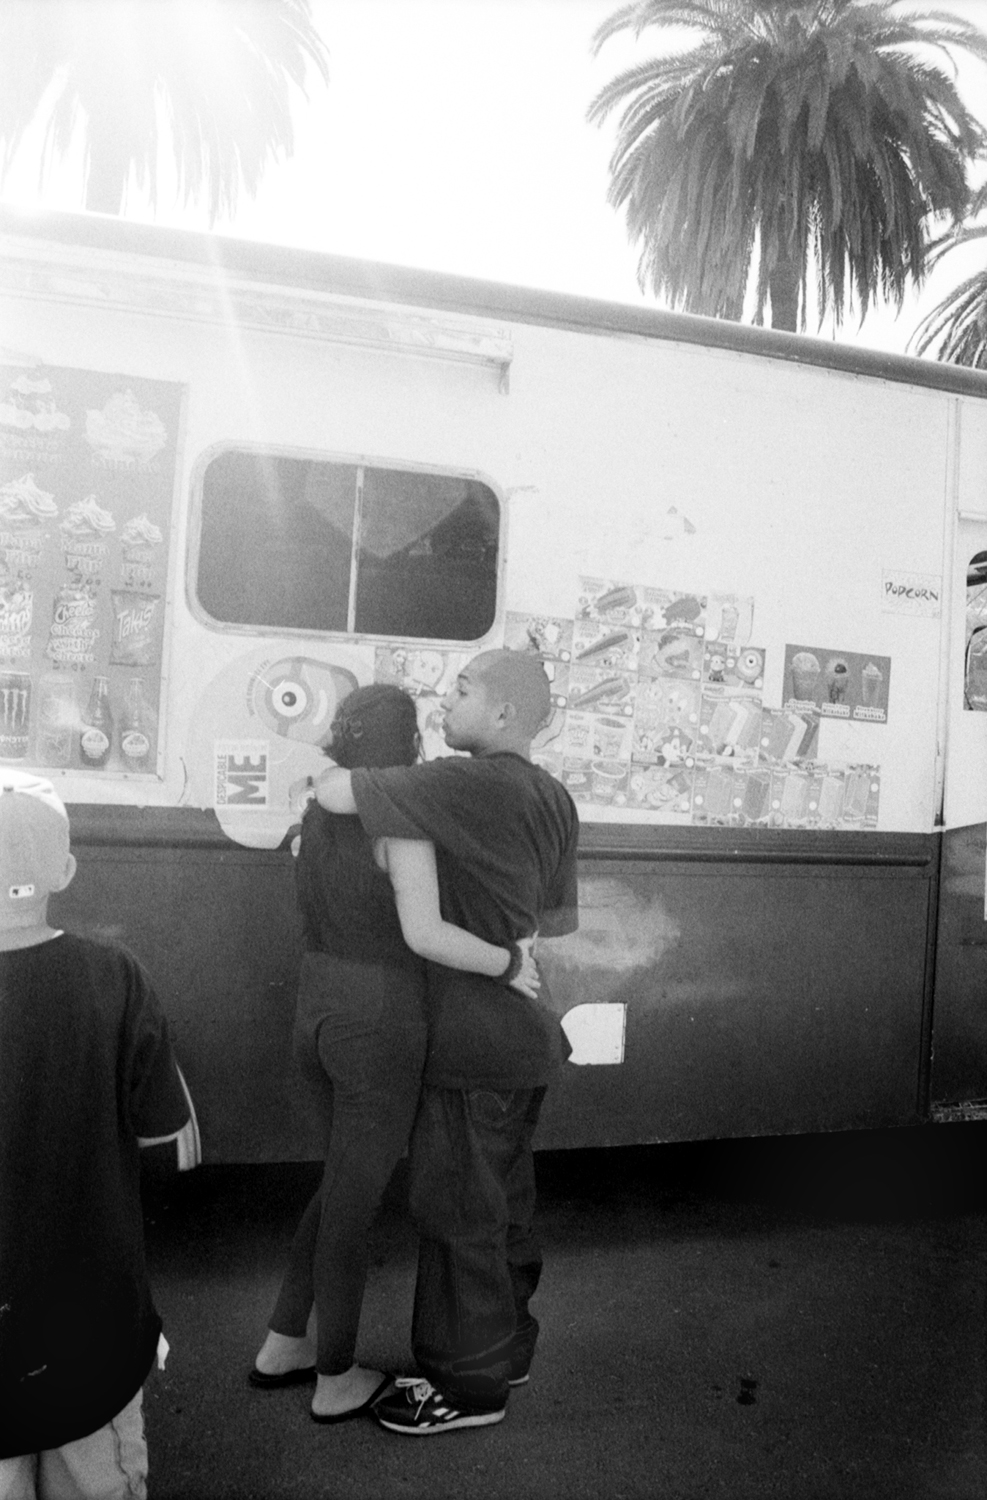 work_ice cream truck at elysian park